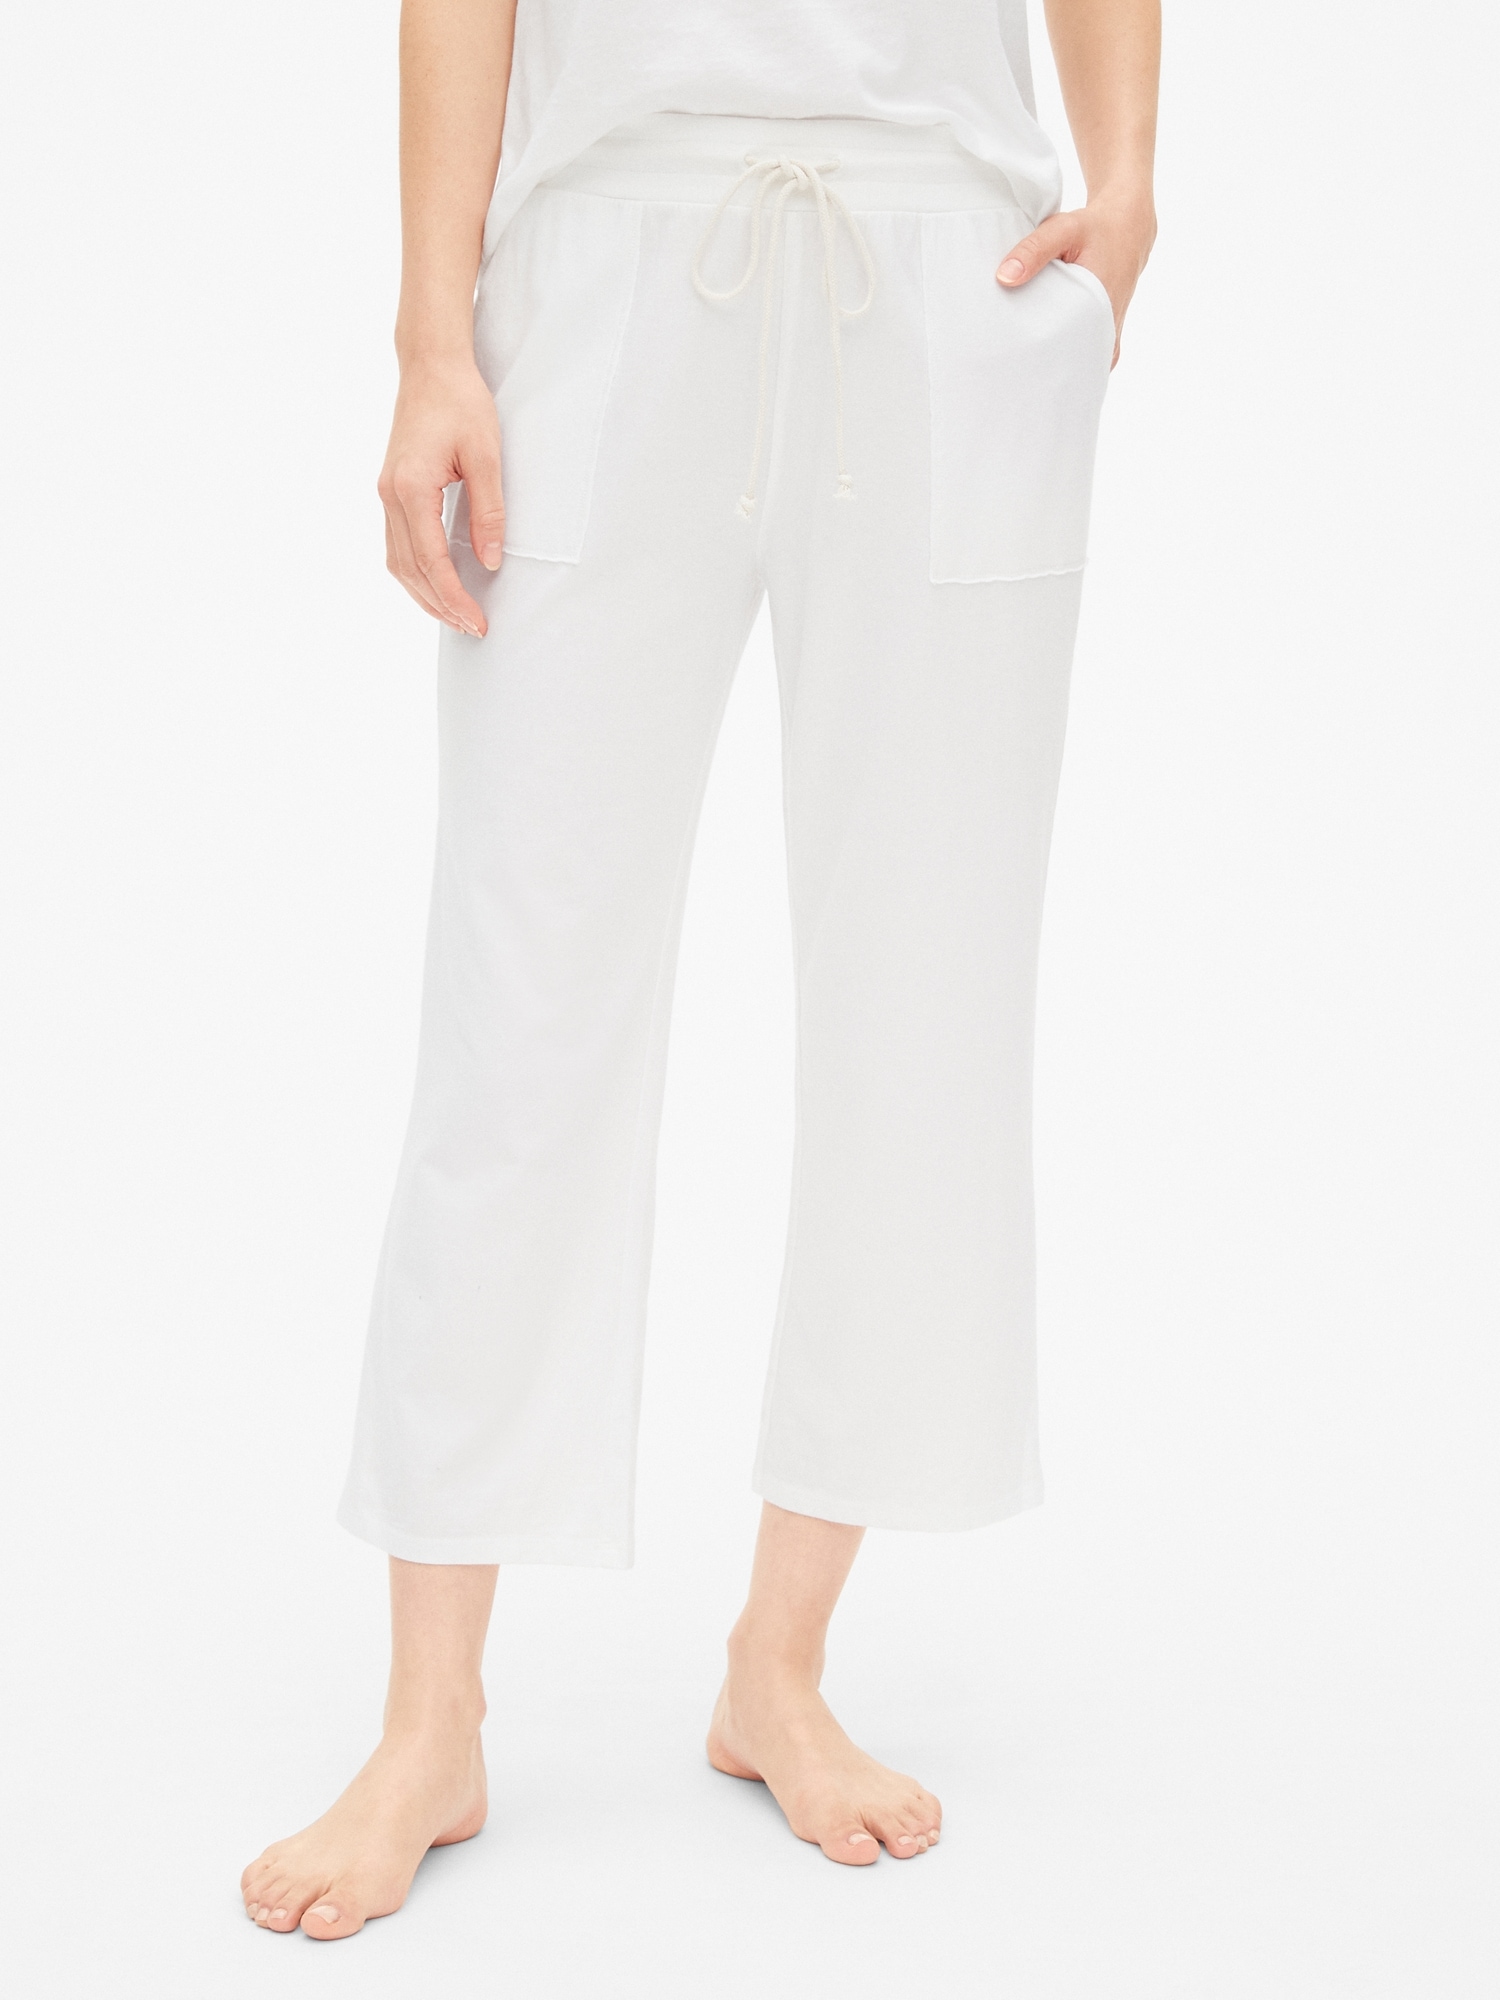 Just Love 100% Cotton Women's Capri Pajama Pants Sleepwear - Comfortable  and Stylish (Blue - Cat Naps, Small)